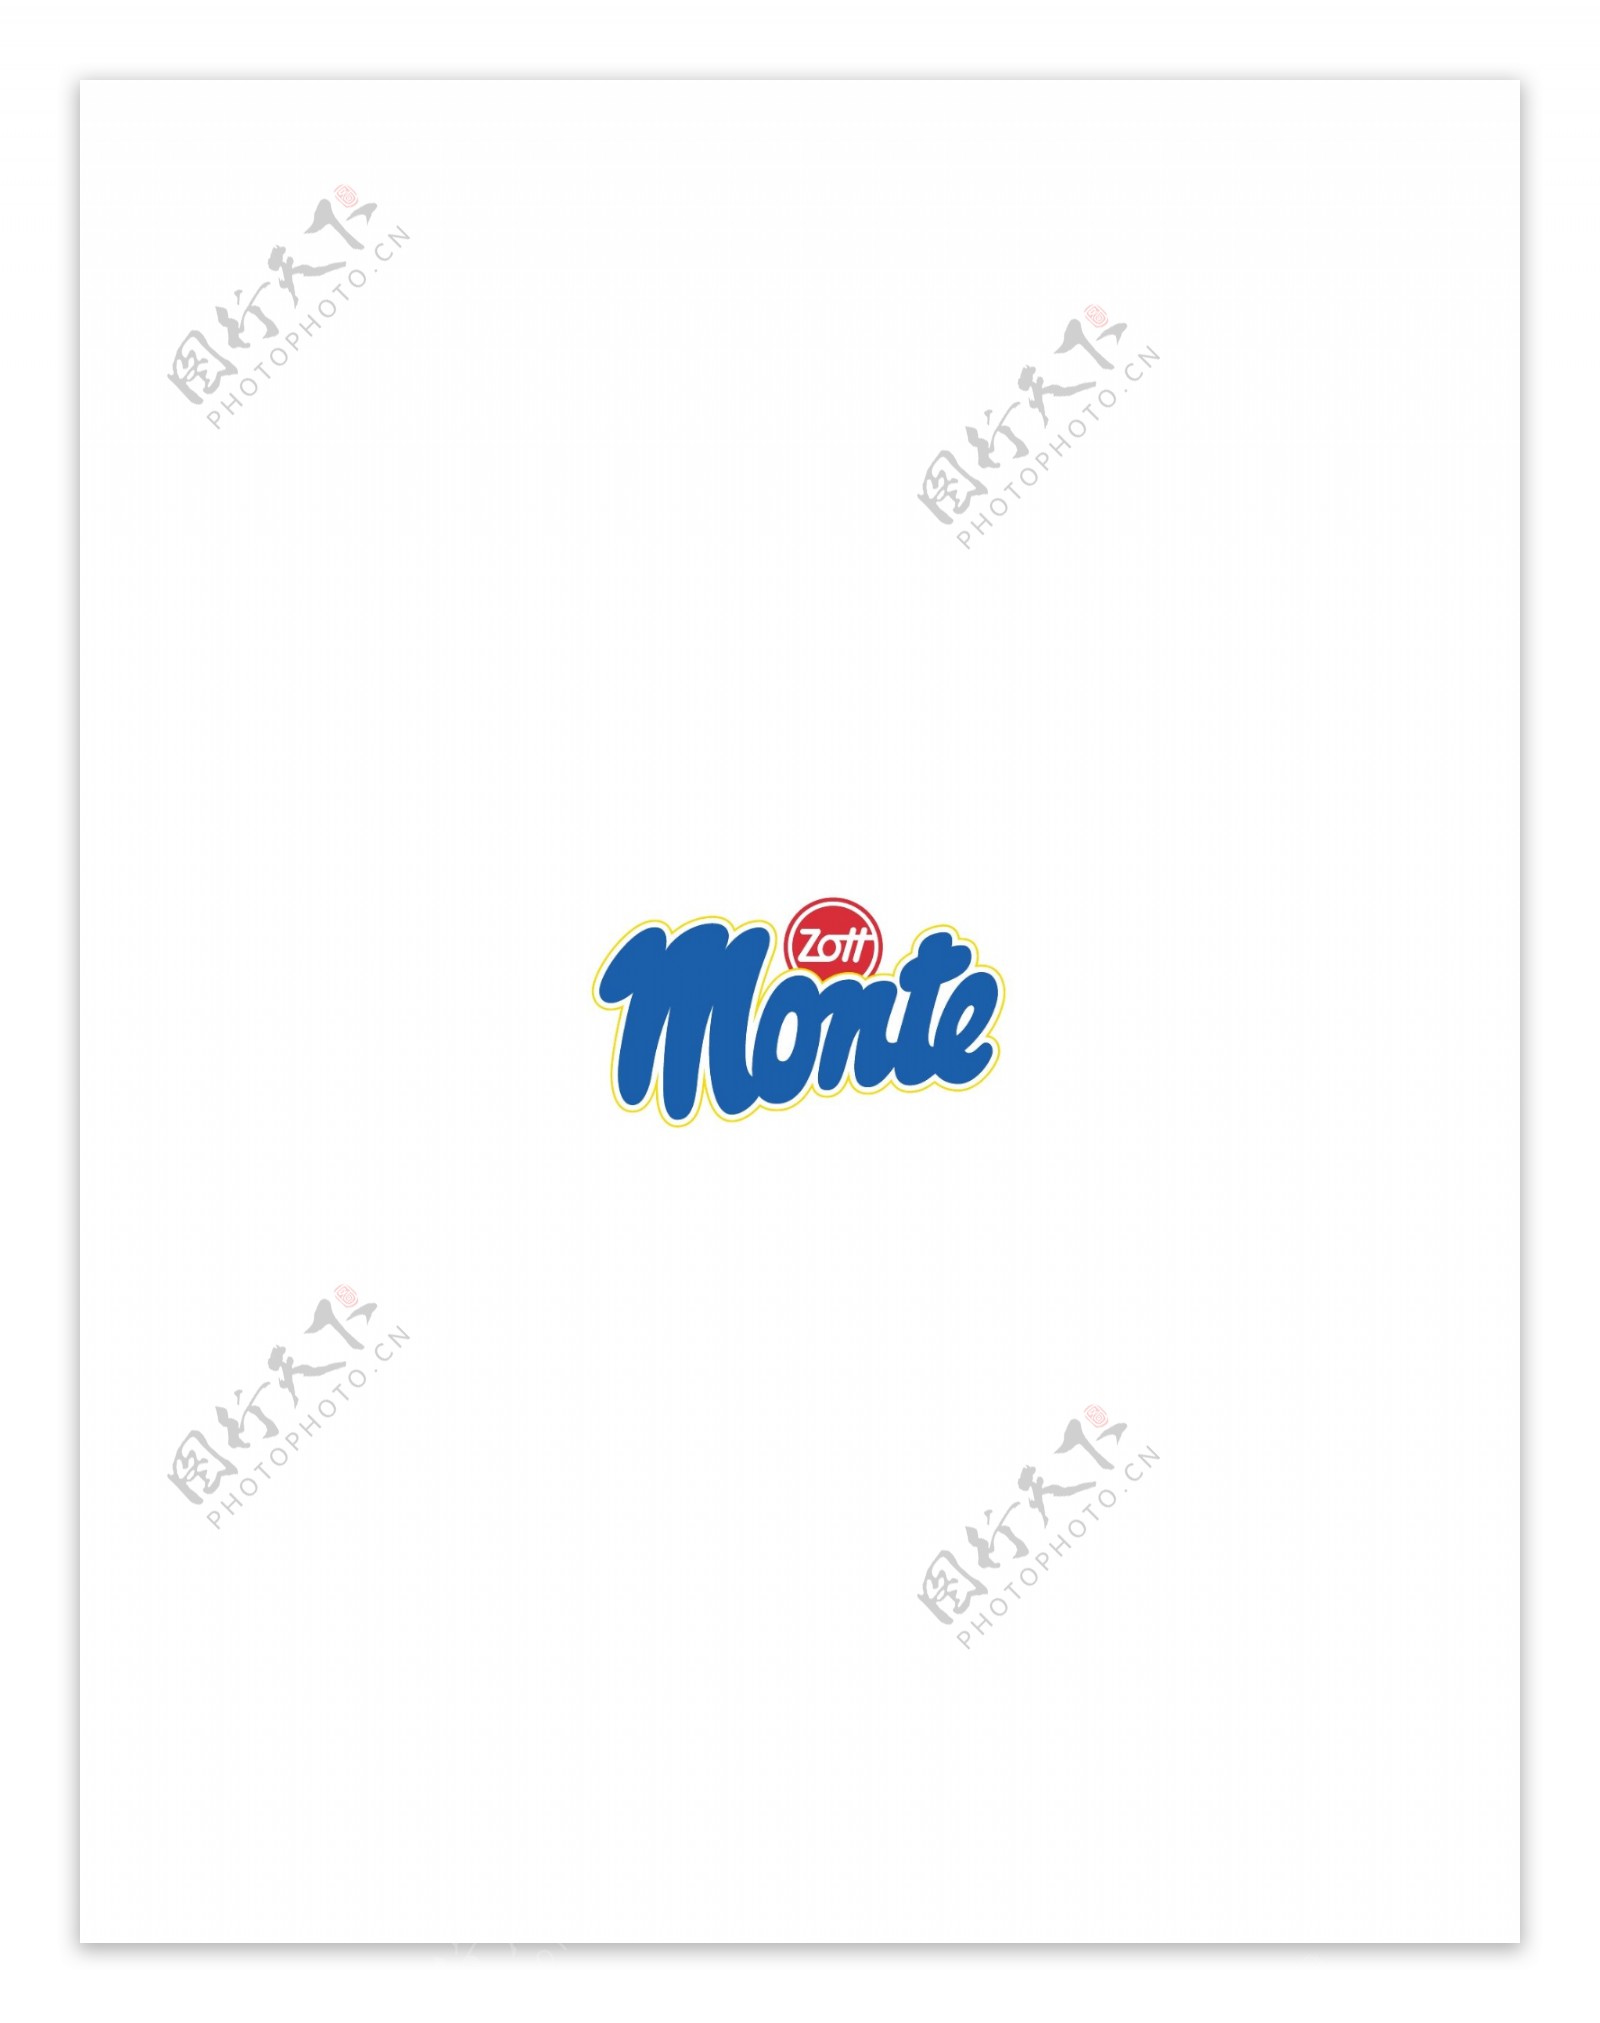 Montelogo设计欣赏Monte食物品牌标志下载标志设计欣赏